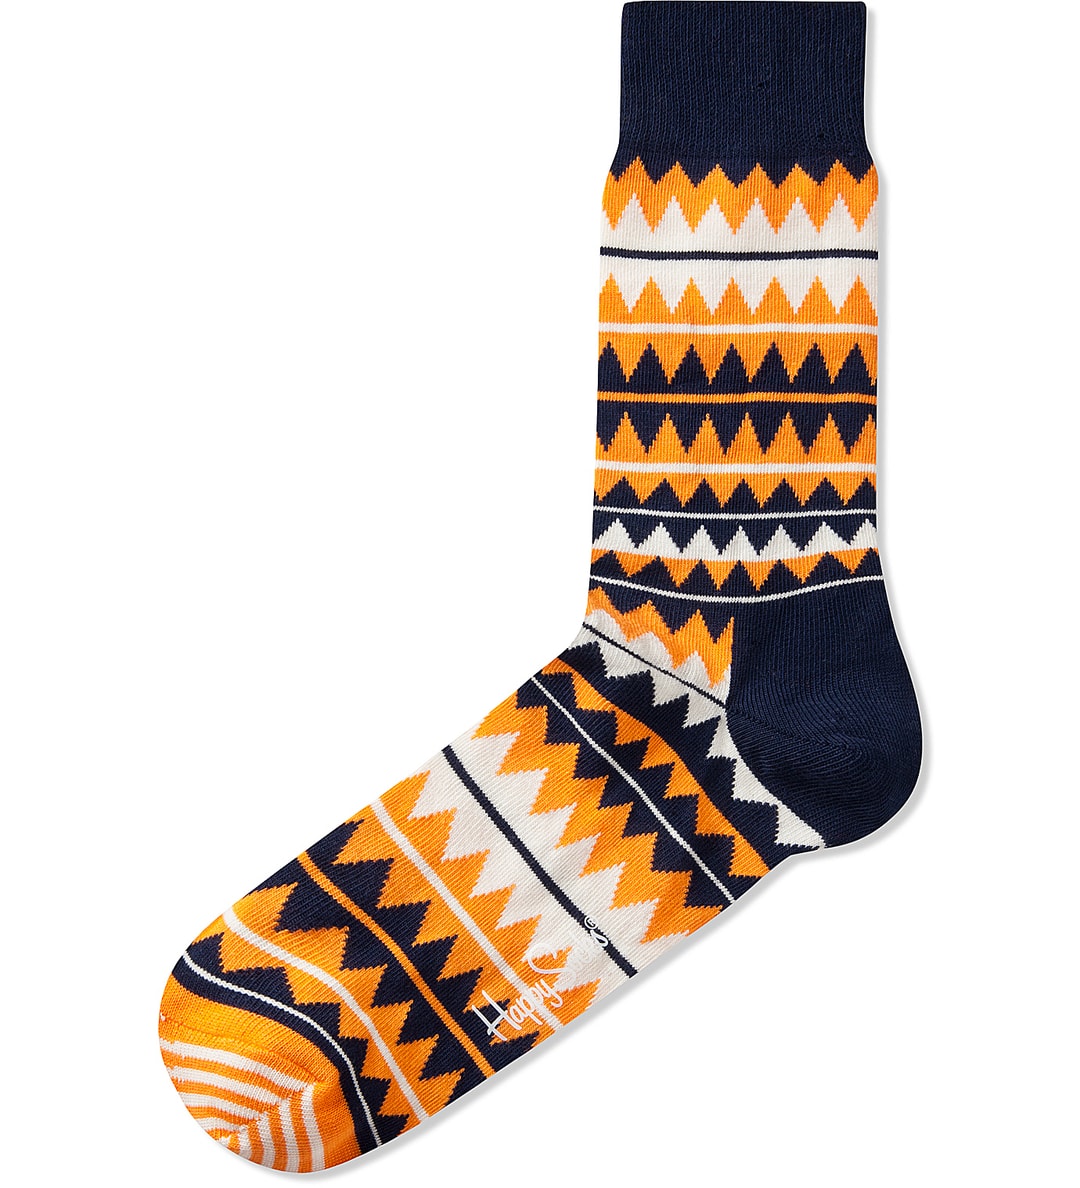 Happy Socks - Navy/Orange/White Zig Zag Sock | HBX - Globally Curated ...